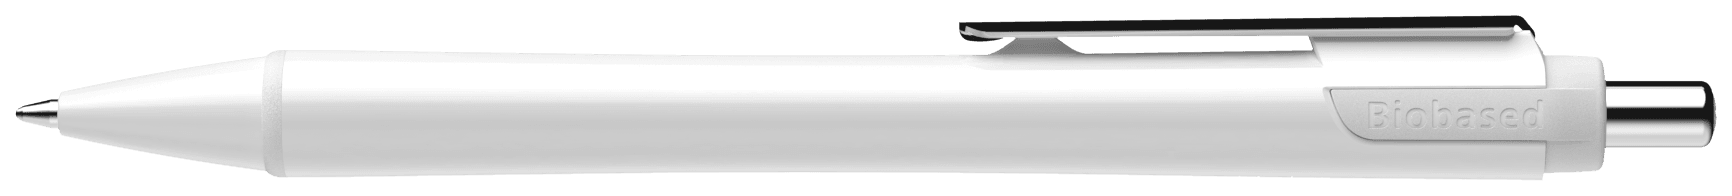 Slider Xite Promo in Farbe white/white